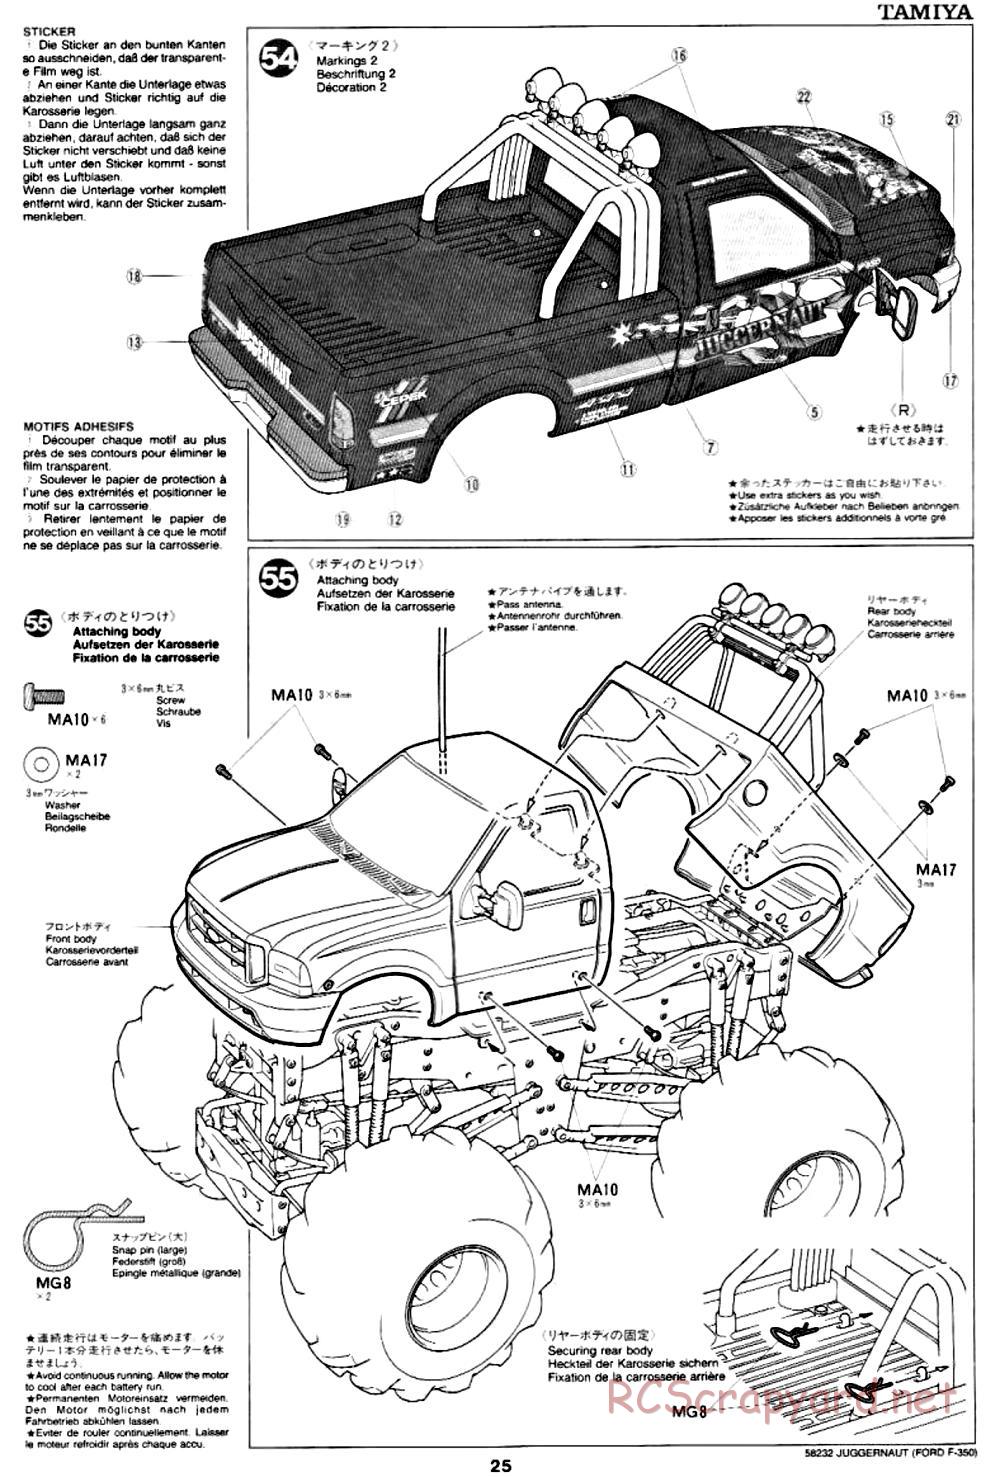 Tamiya - Juggernaut Chassis - Manual - Page 25